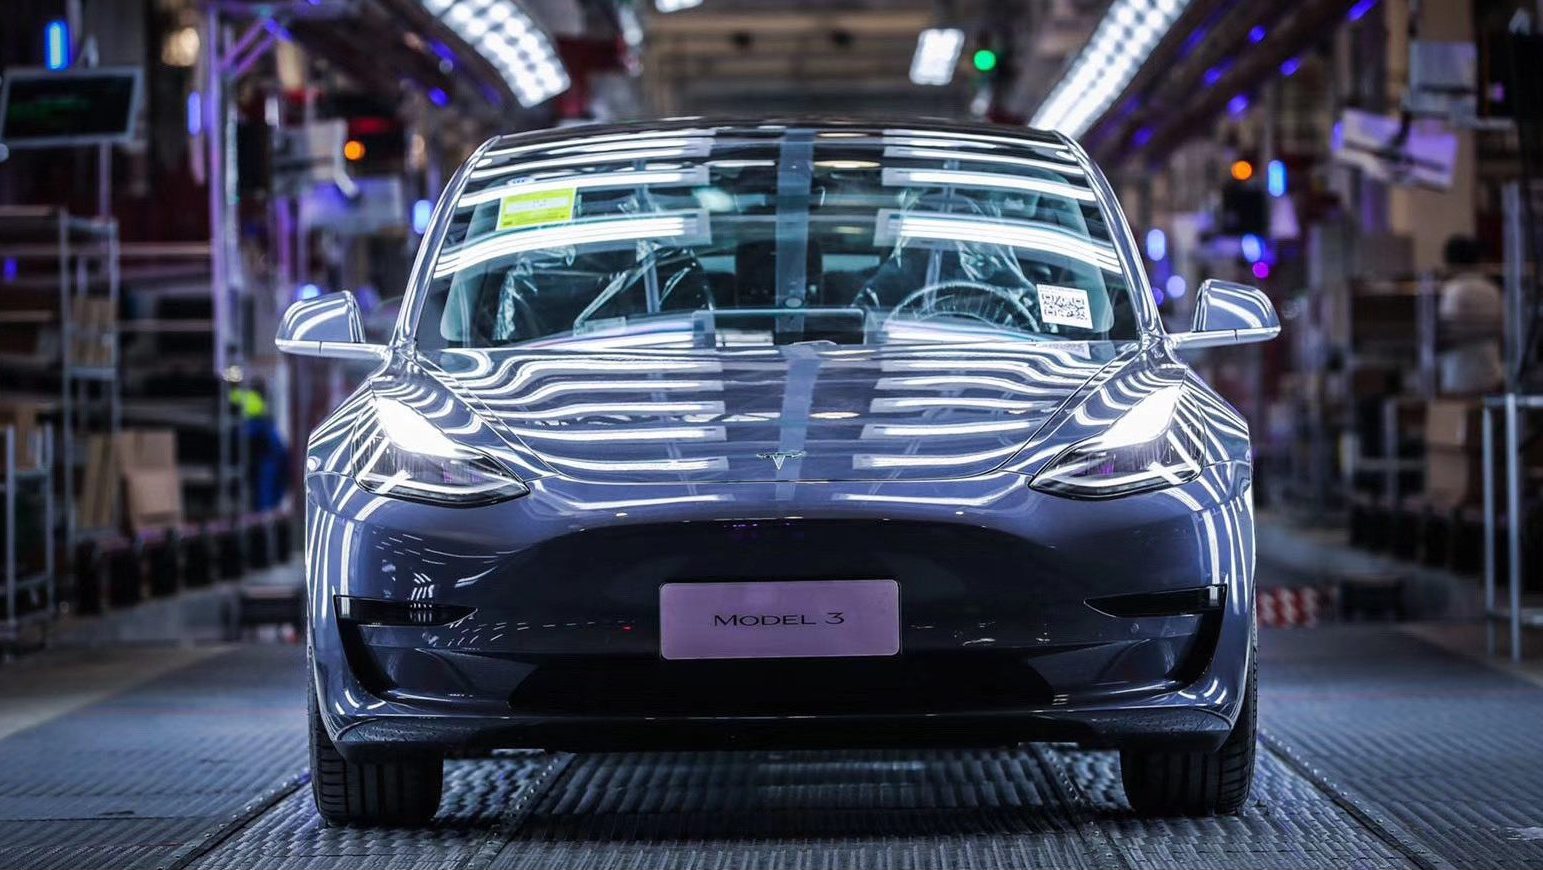 Tesla China is on track for next big Model 3 milestone for Gigafactory Shanghai